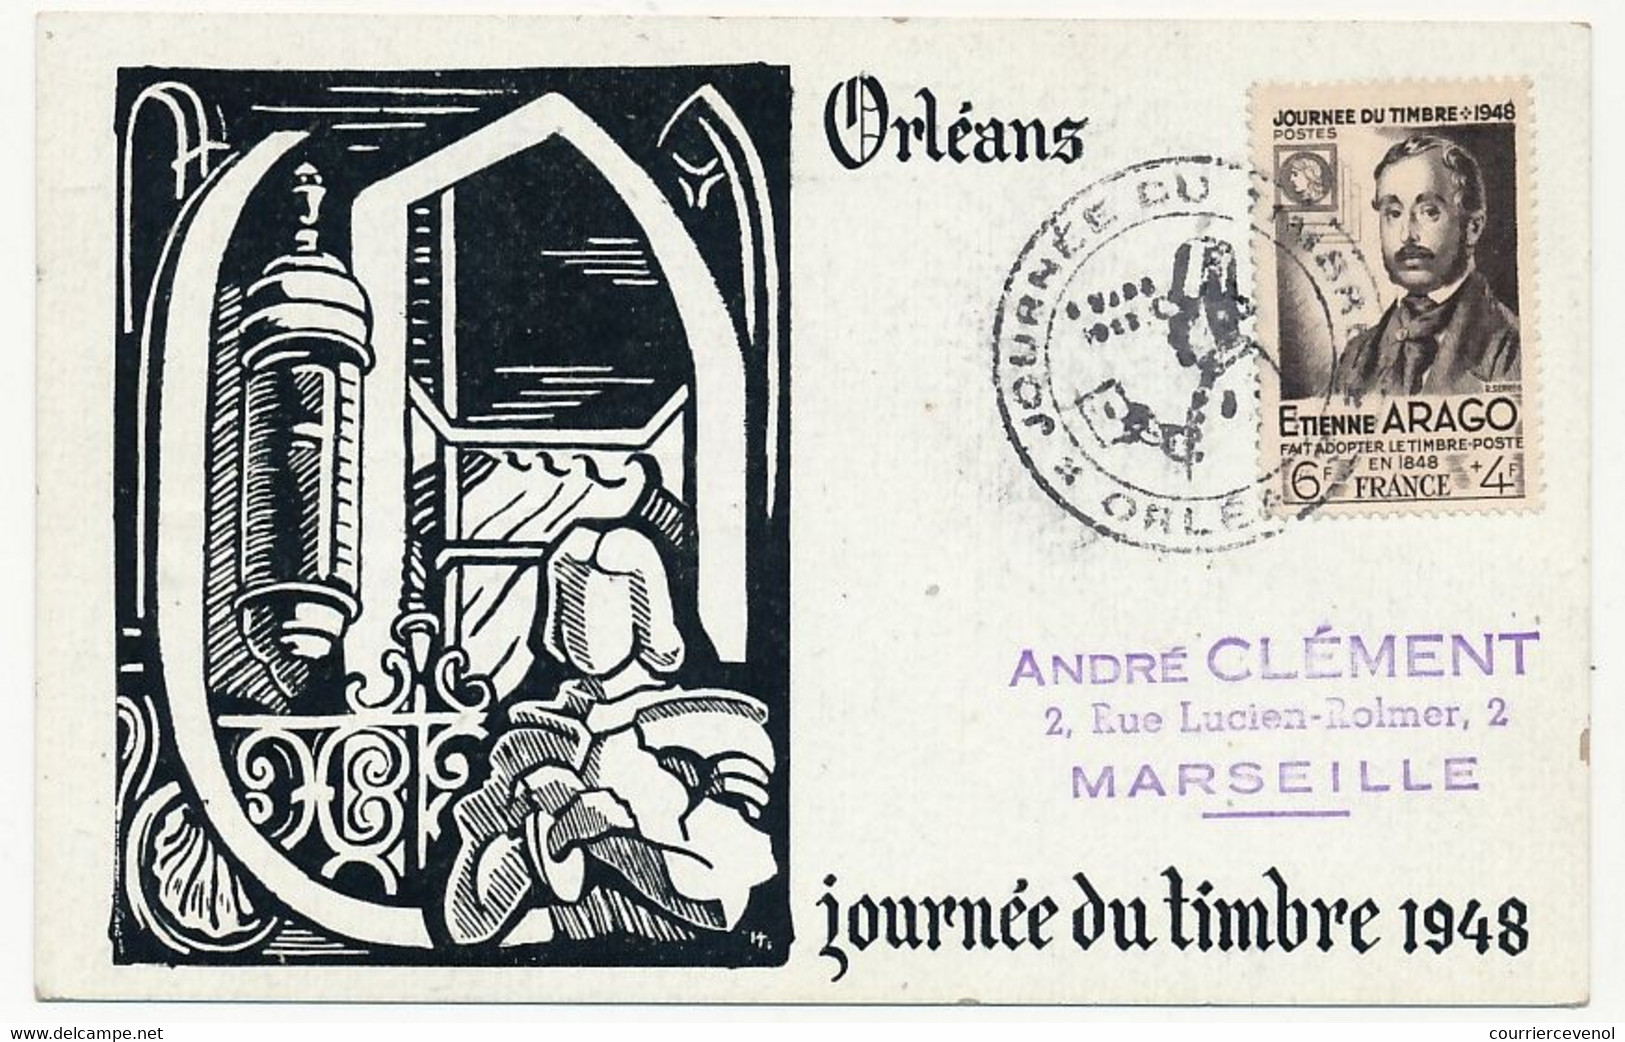 FRANCE => Carte Locale "Journée Du Timbre" 1948 - Timbre 6F + 4F Etienne Arago - ORLEANS 8.3.1948 - Stamp's Day